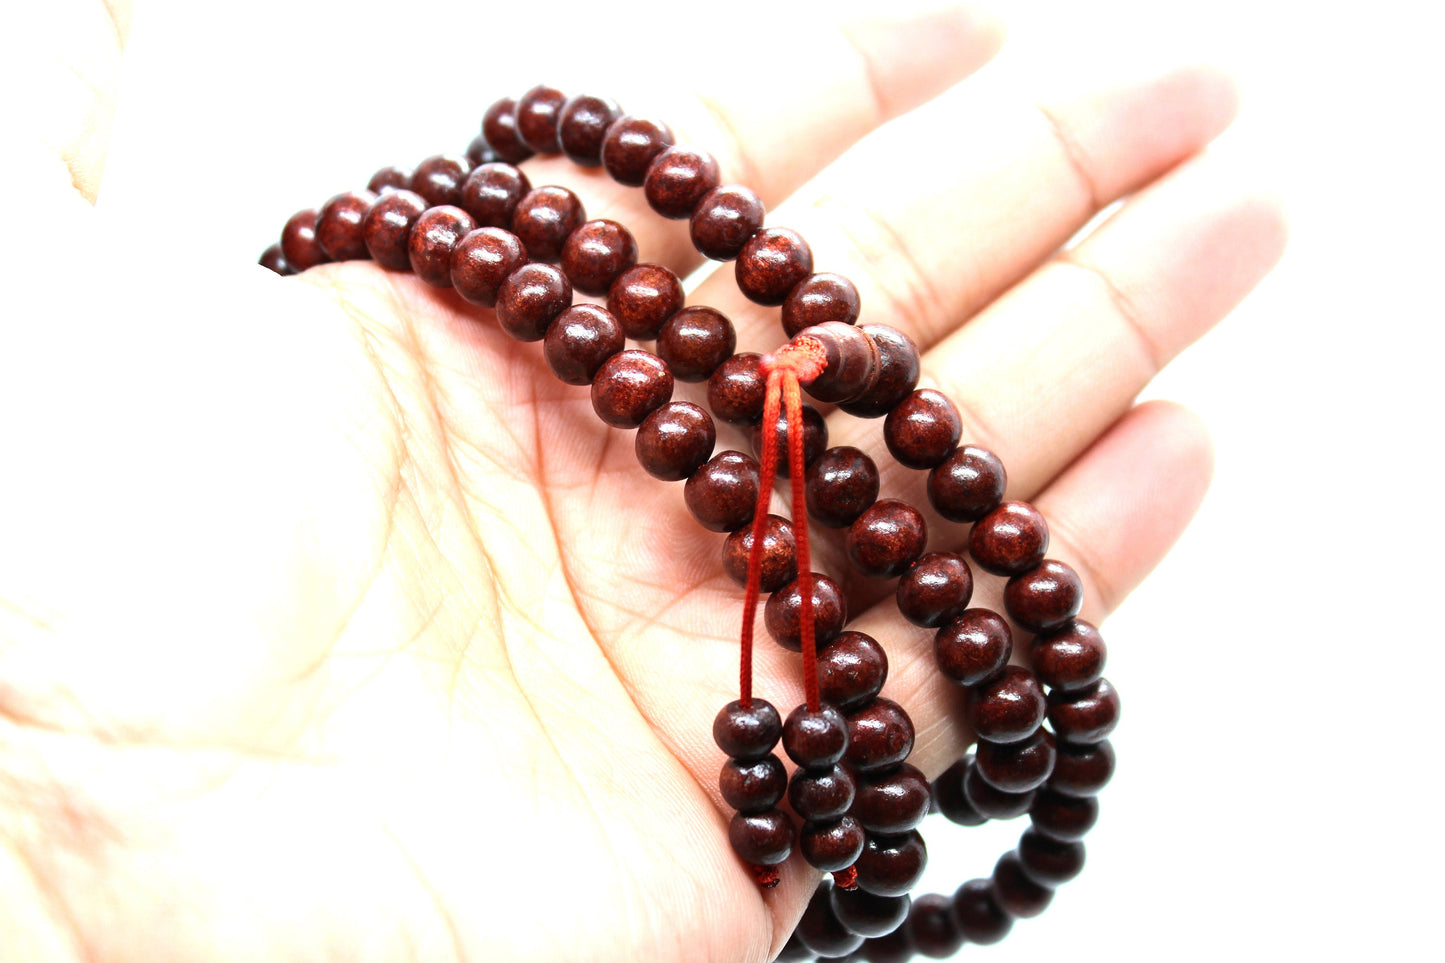 Buddhist Rosewood mala, Tibetan 108 8mm Rosewood Prayer Beads Buddhist Yoga Meditation Mala Necklace Bracelet, Rose wood Adjustable mala